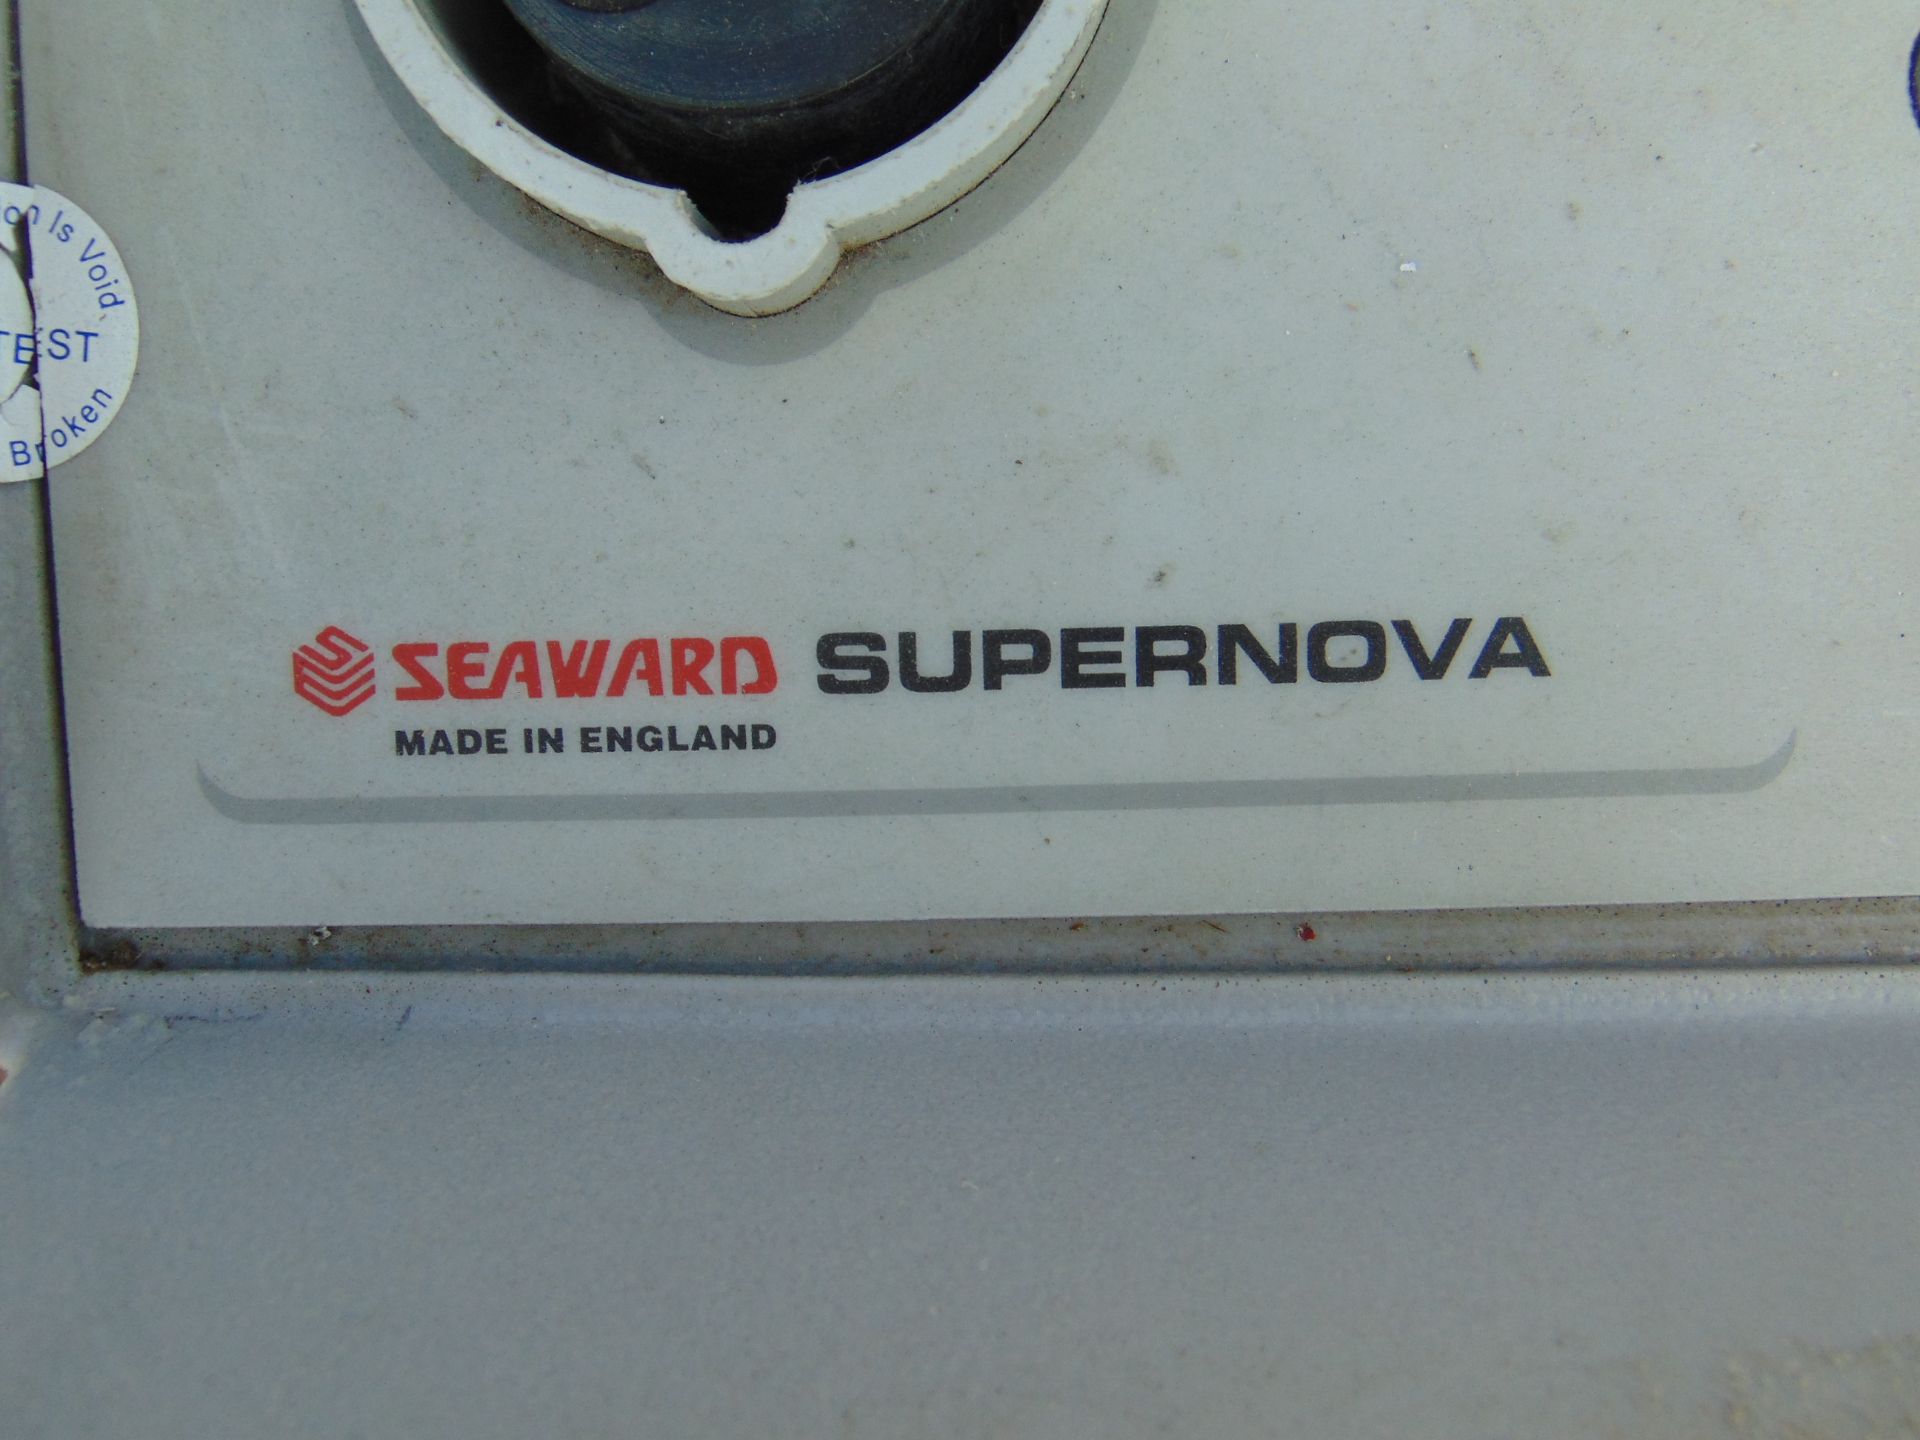 Seaward Supernova PAT Tester - Image 4 of 6